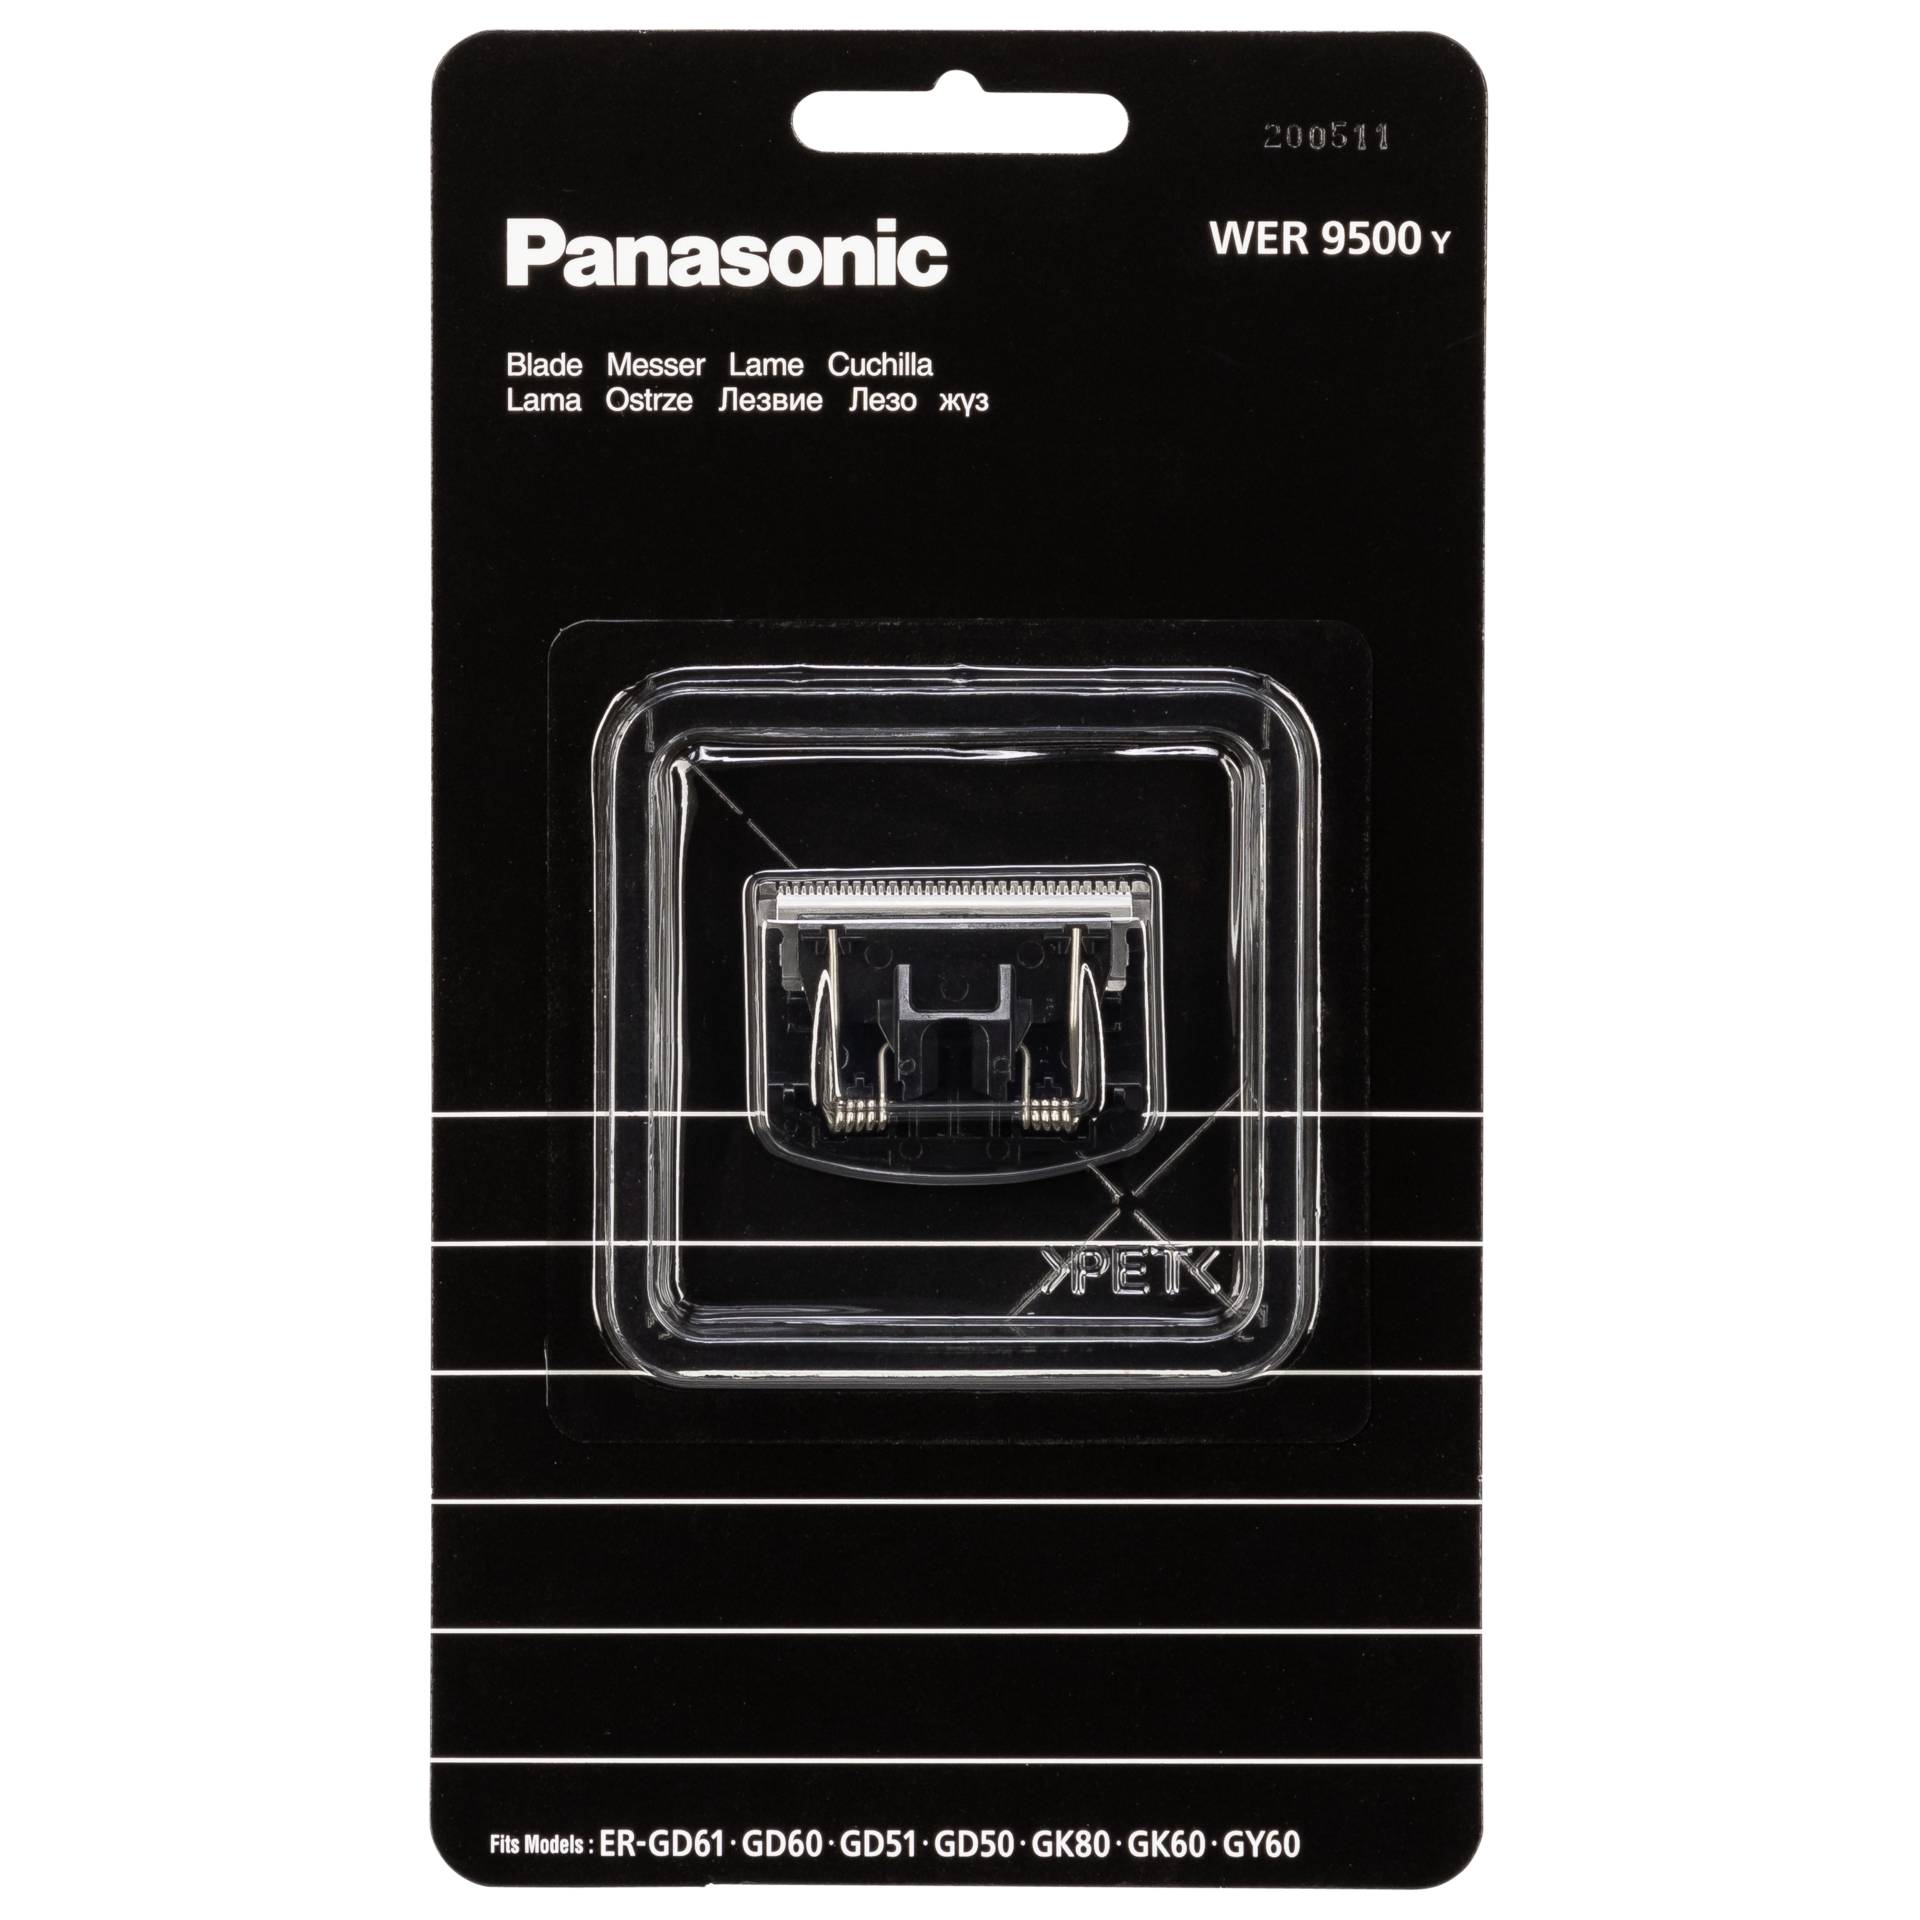 Panasonic WER 9500 Y1361